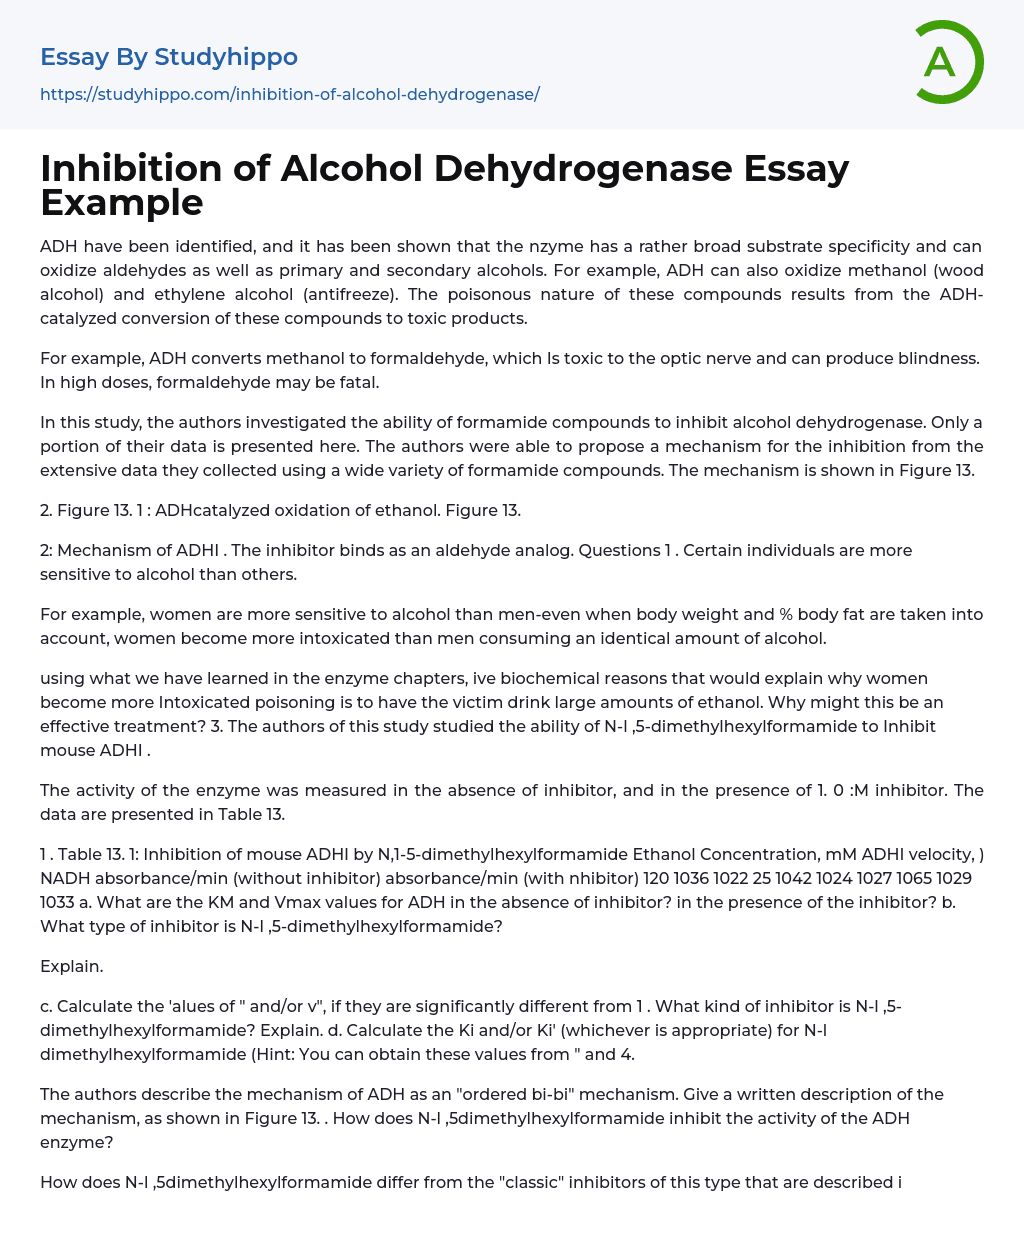 Inhibition of Alcohol Dehydrogenase Essay Example